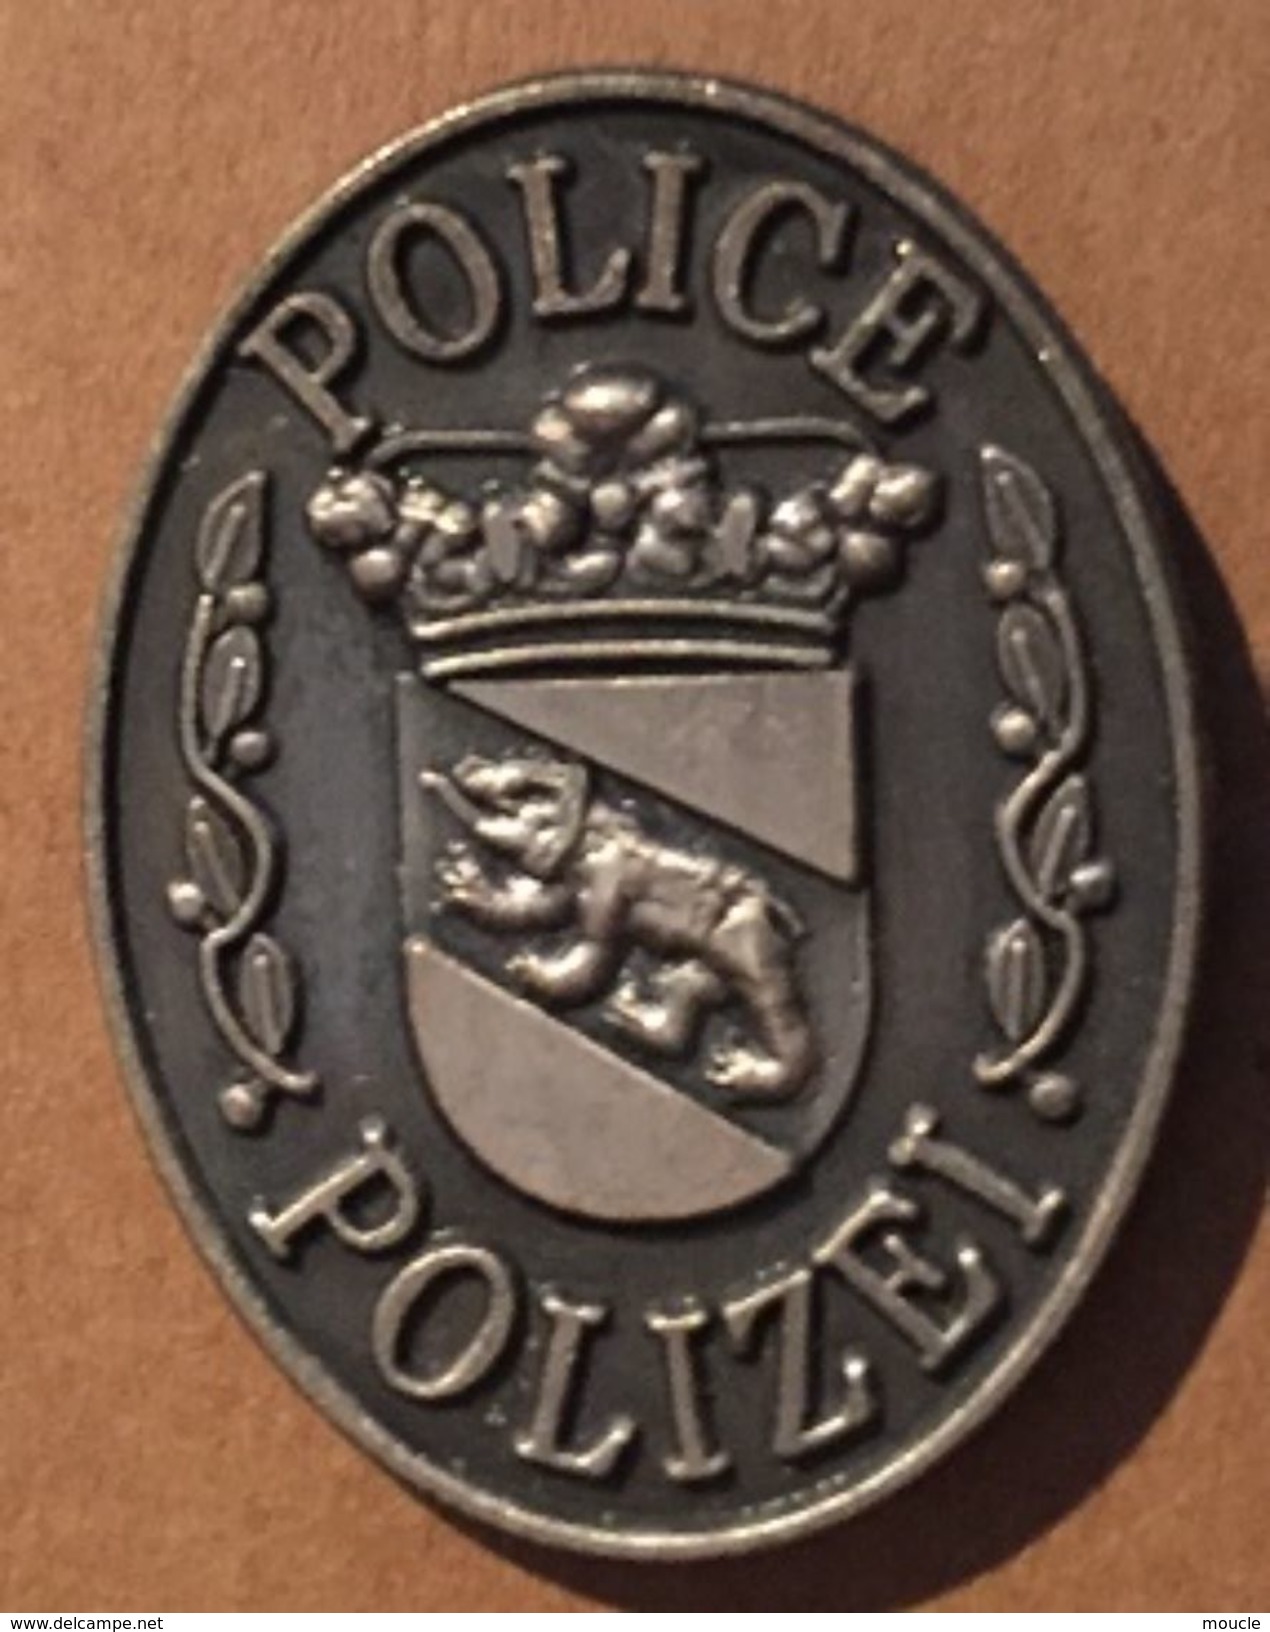 POLICE BERNOISE - BERNER POLIZEI - SUISSE - COP SWISS - SCHWEIZ - BERNE - BERN - OURS - BÄR   -     (19) - Police